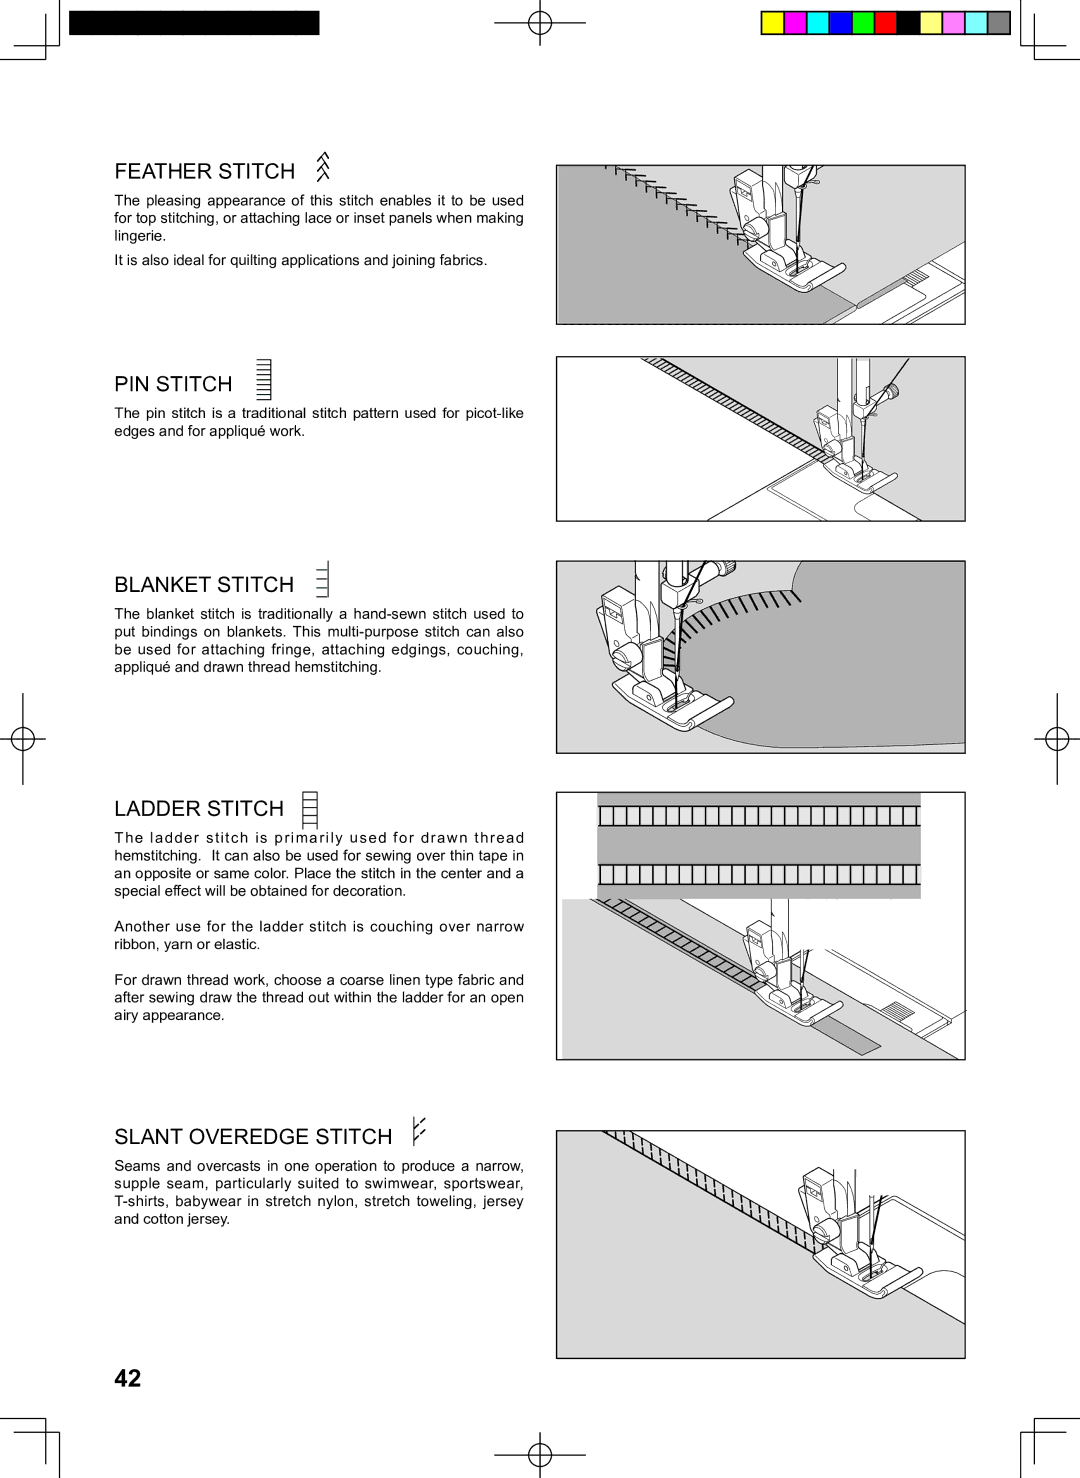 Singer 160 instruction manual Feather Stitch, PIN Stitch, Blanket Stitch, Ladder Stitch, Slant Overedge Stitch 